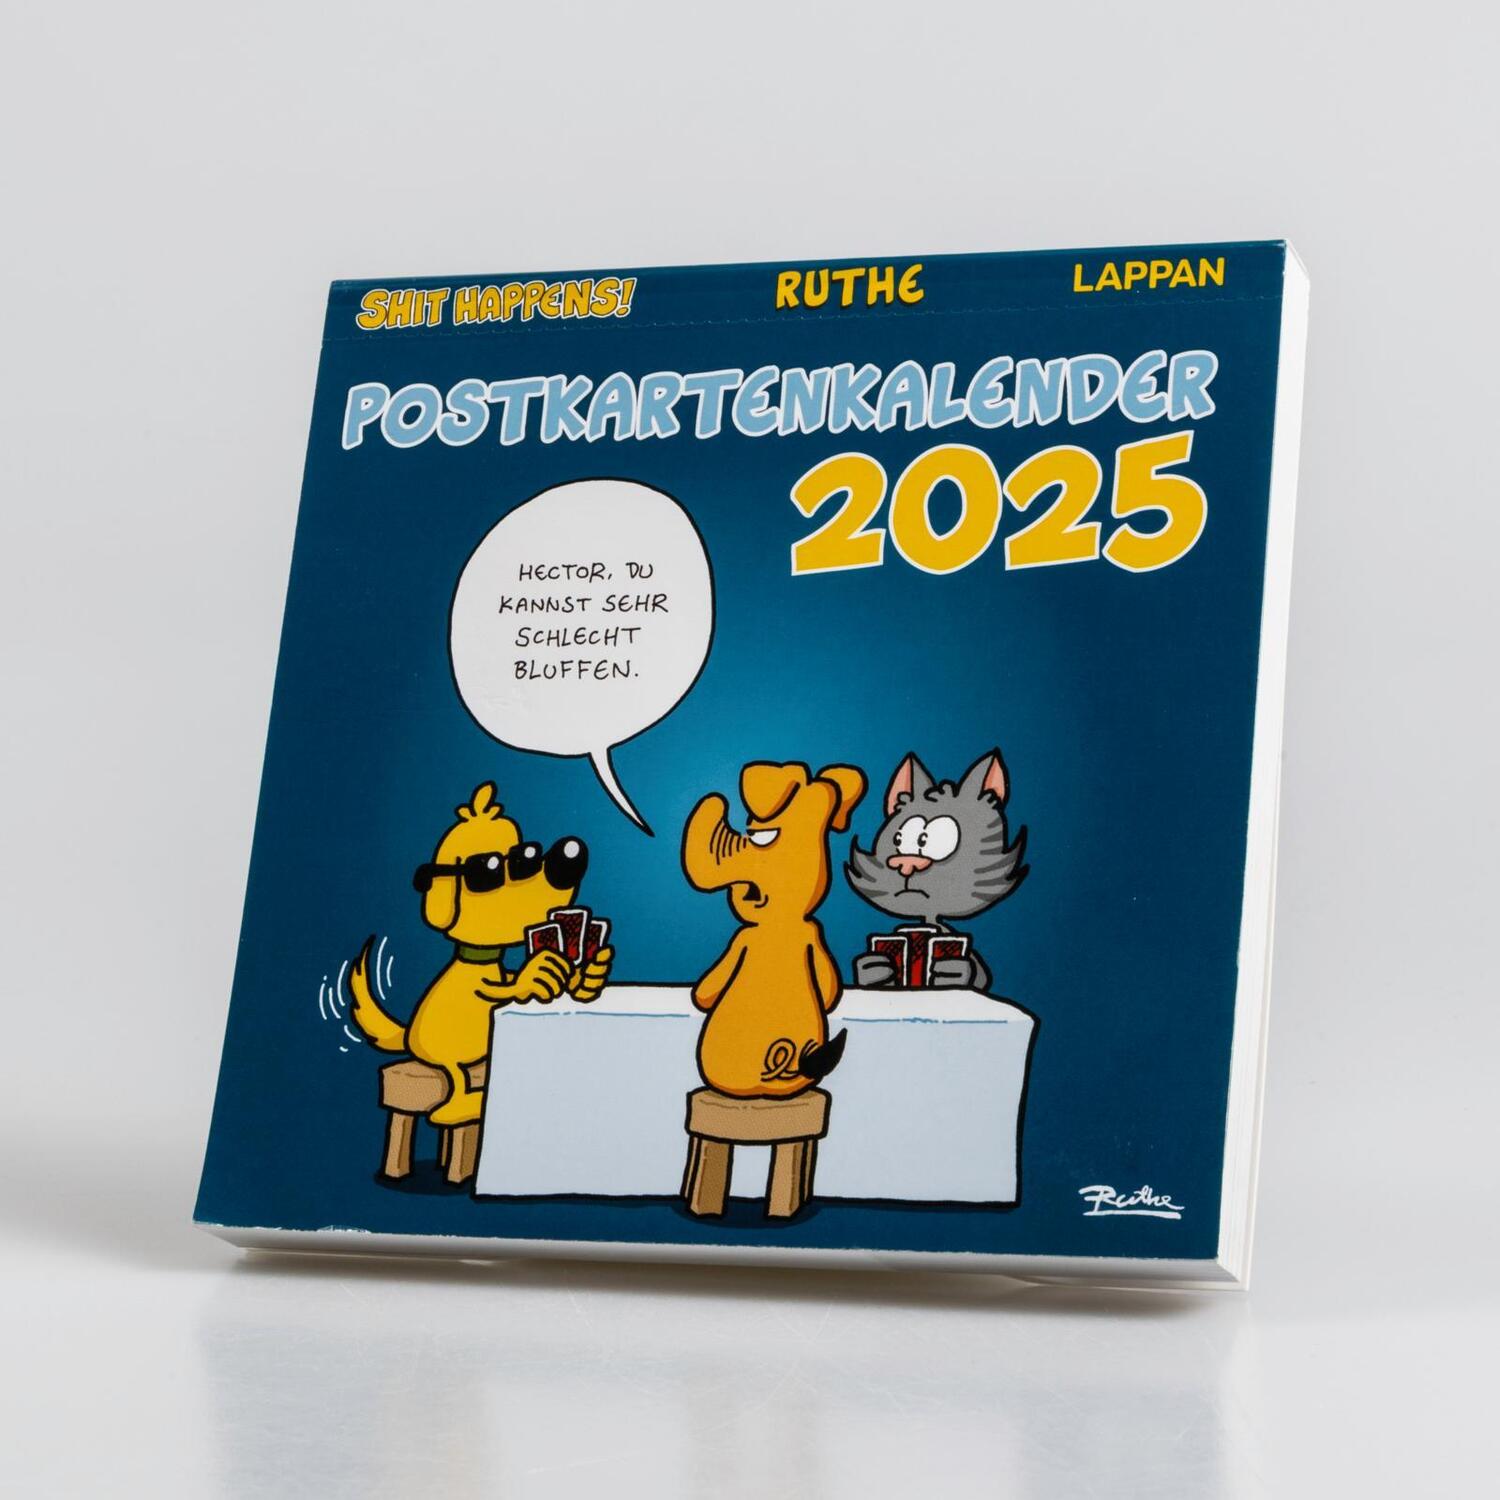 Bild: 9783830321552 | Shit happens! Postkartenkalender 2025 | Ralph Ruthe | Kalender | 2025